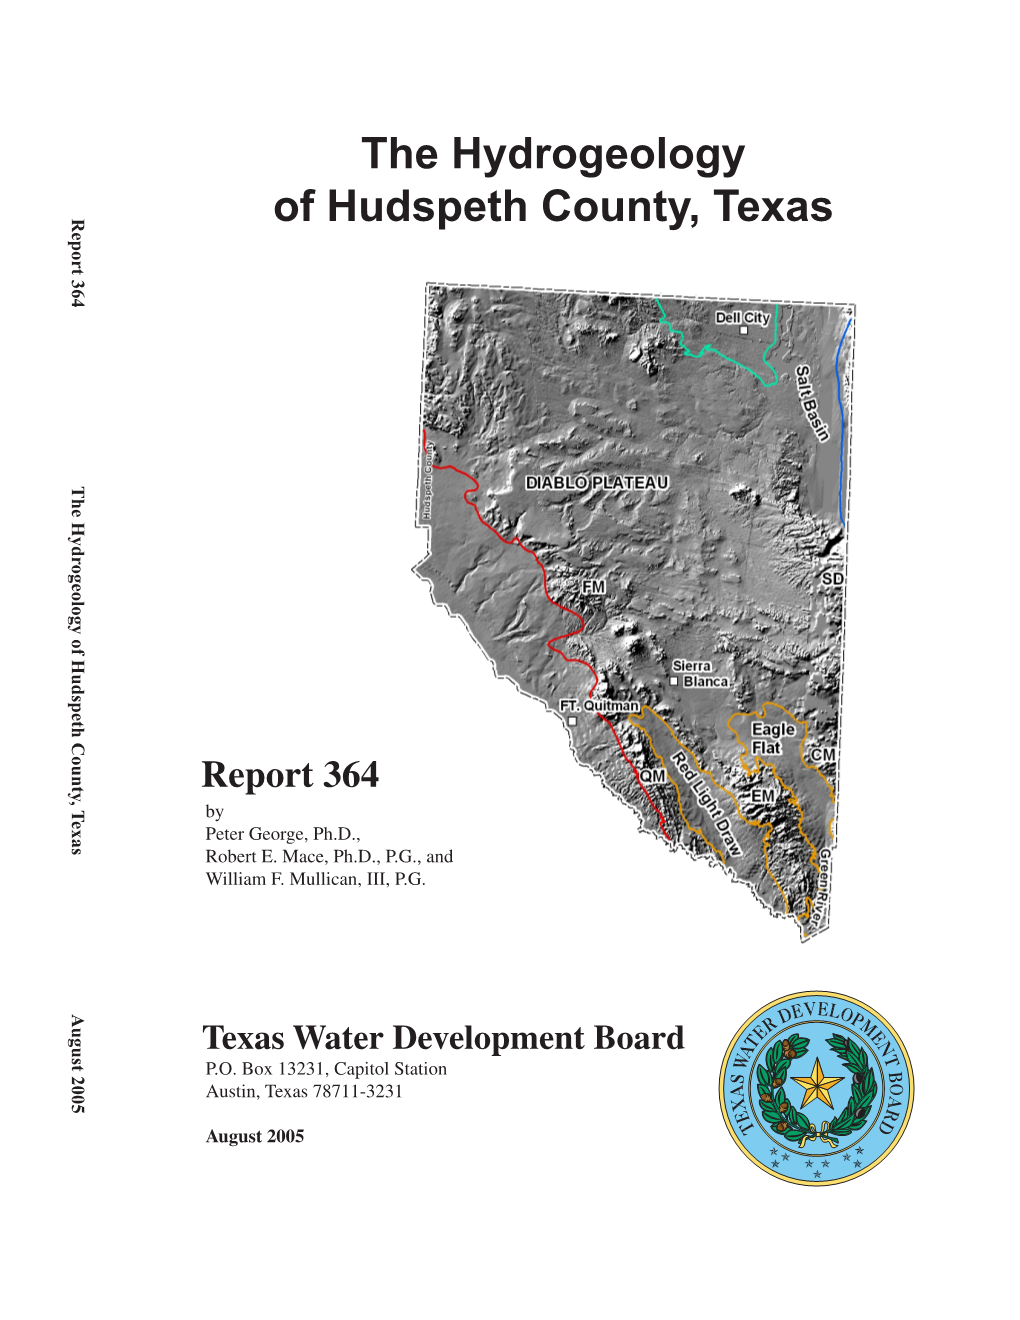 The Hydrogeology of Hudspeth County, Texas August 2005 of Hudspeth County, Texas